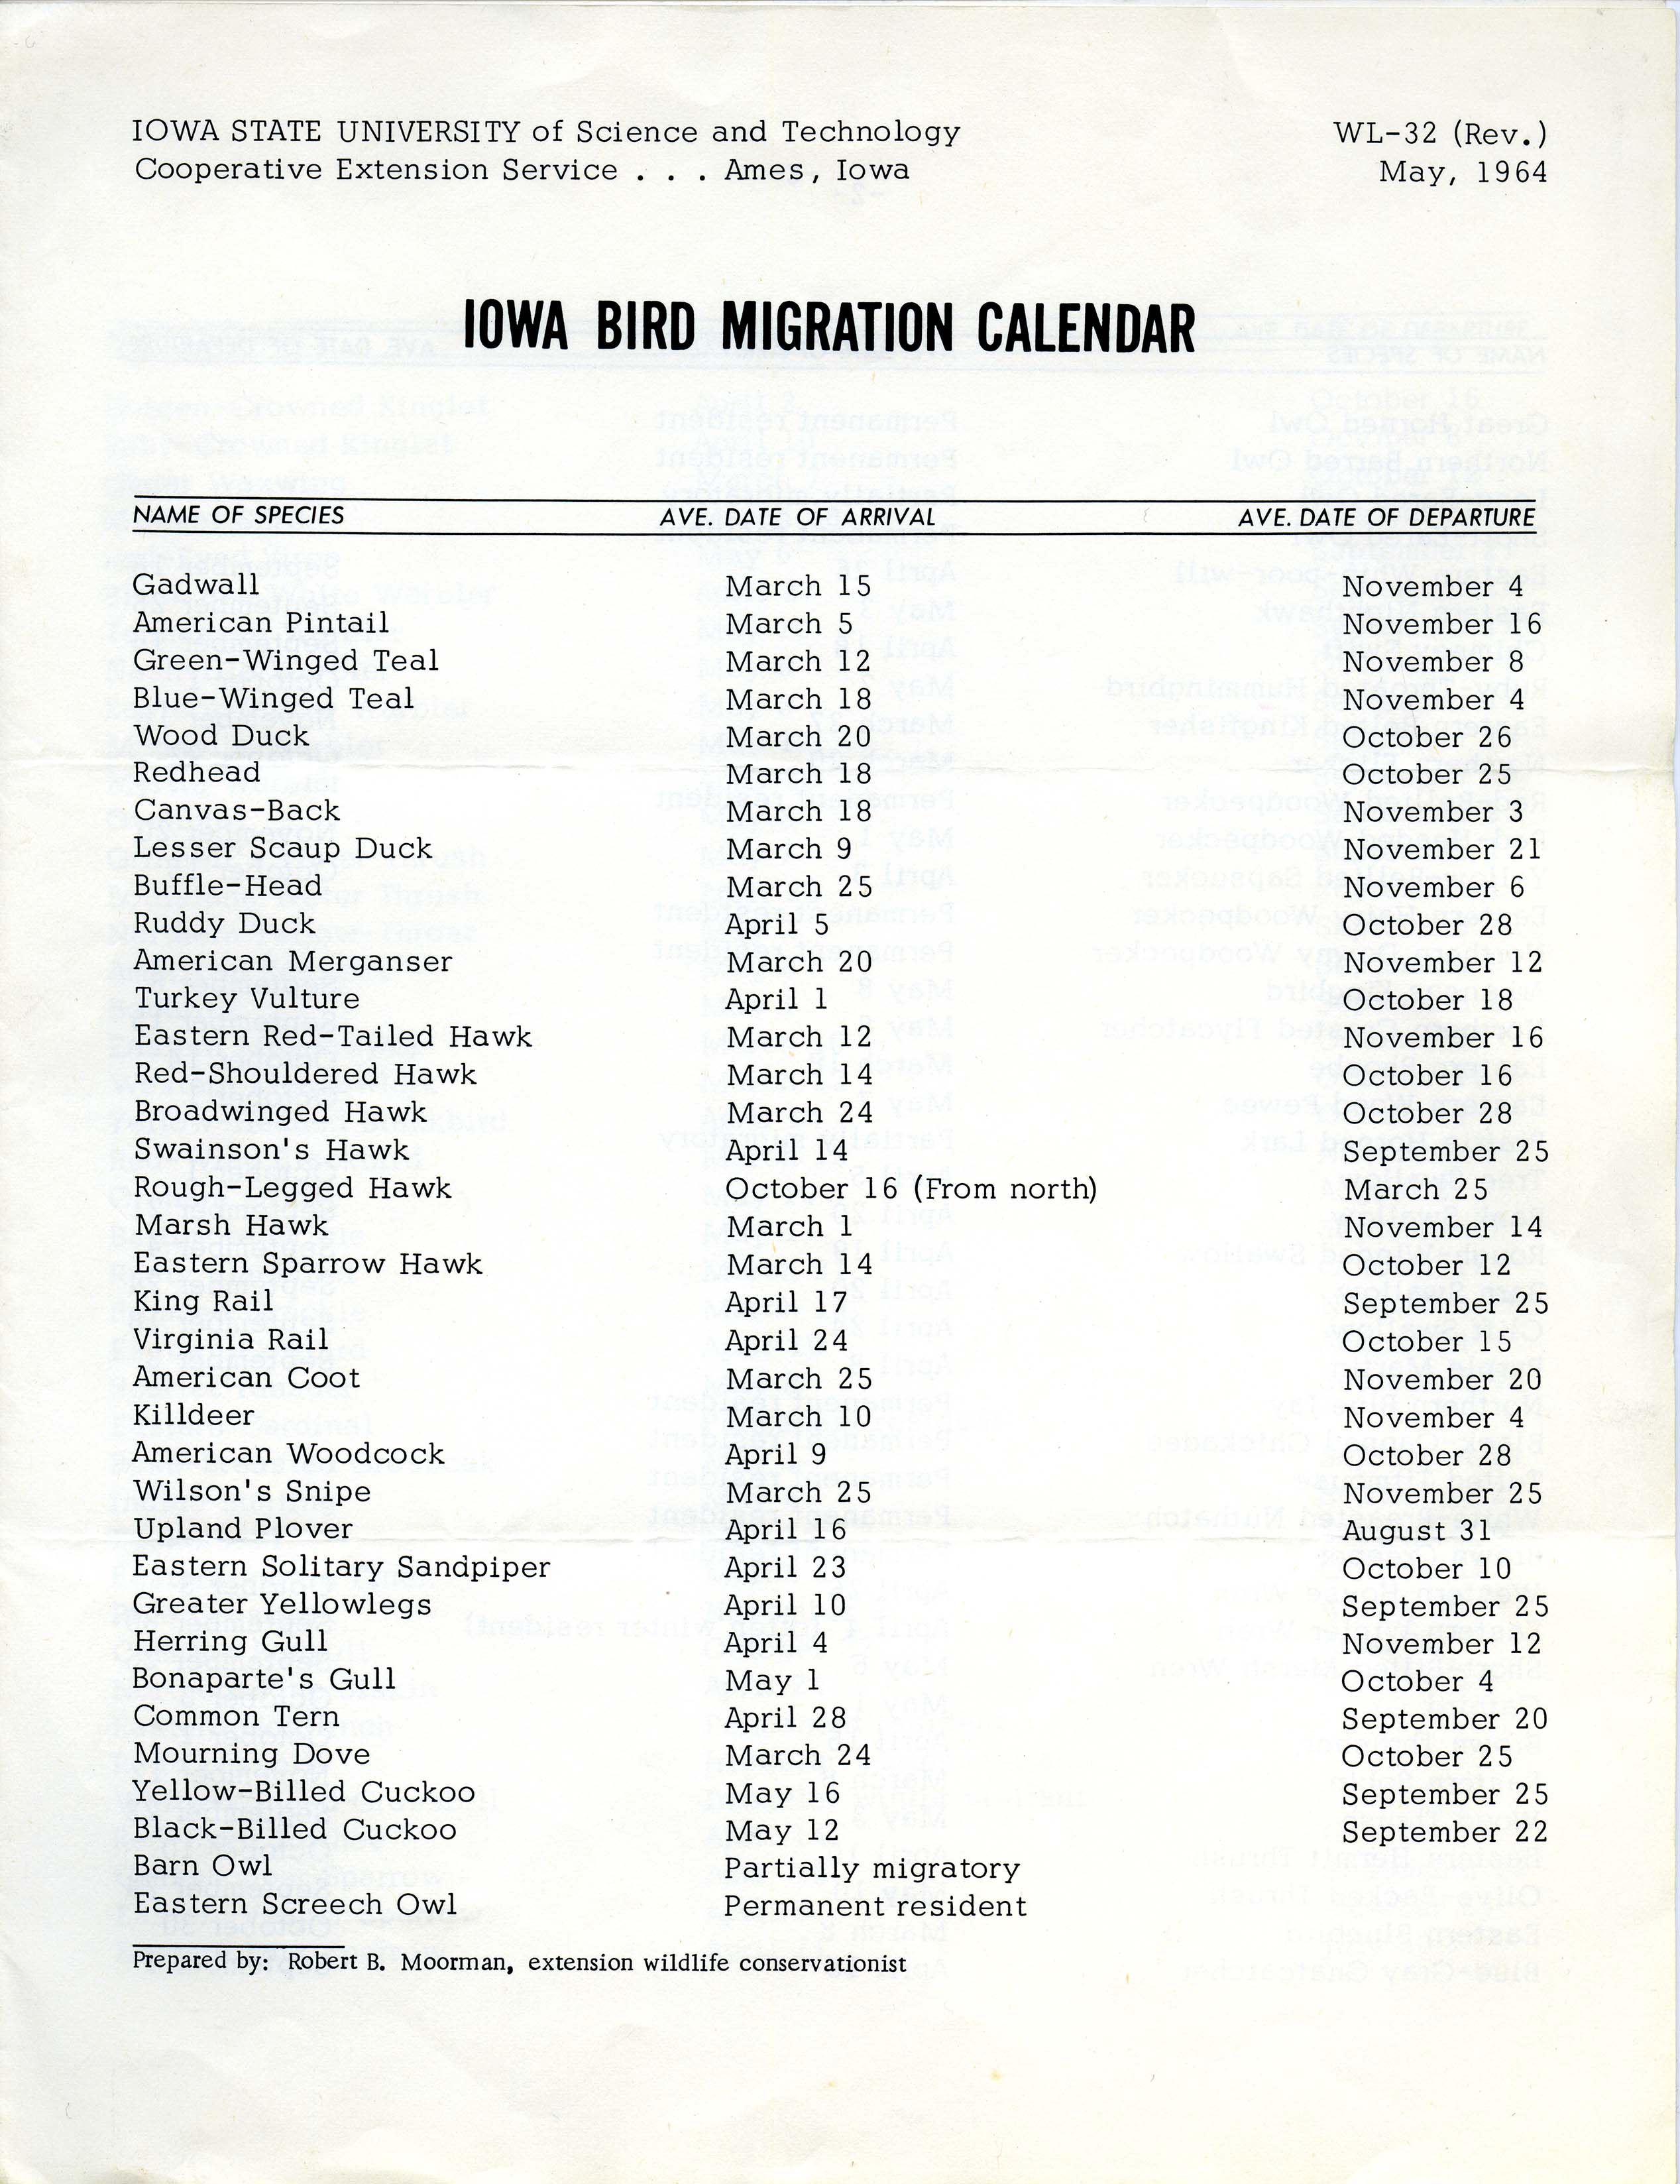 Iowa bird migration calendar